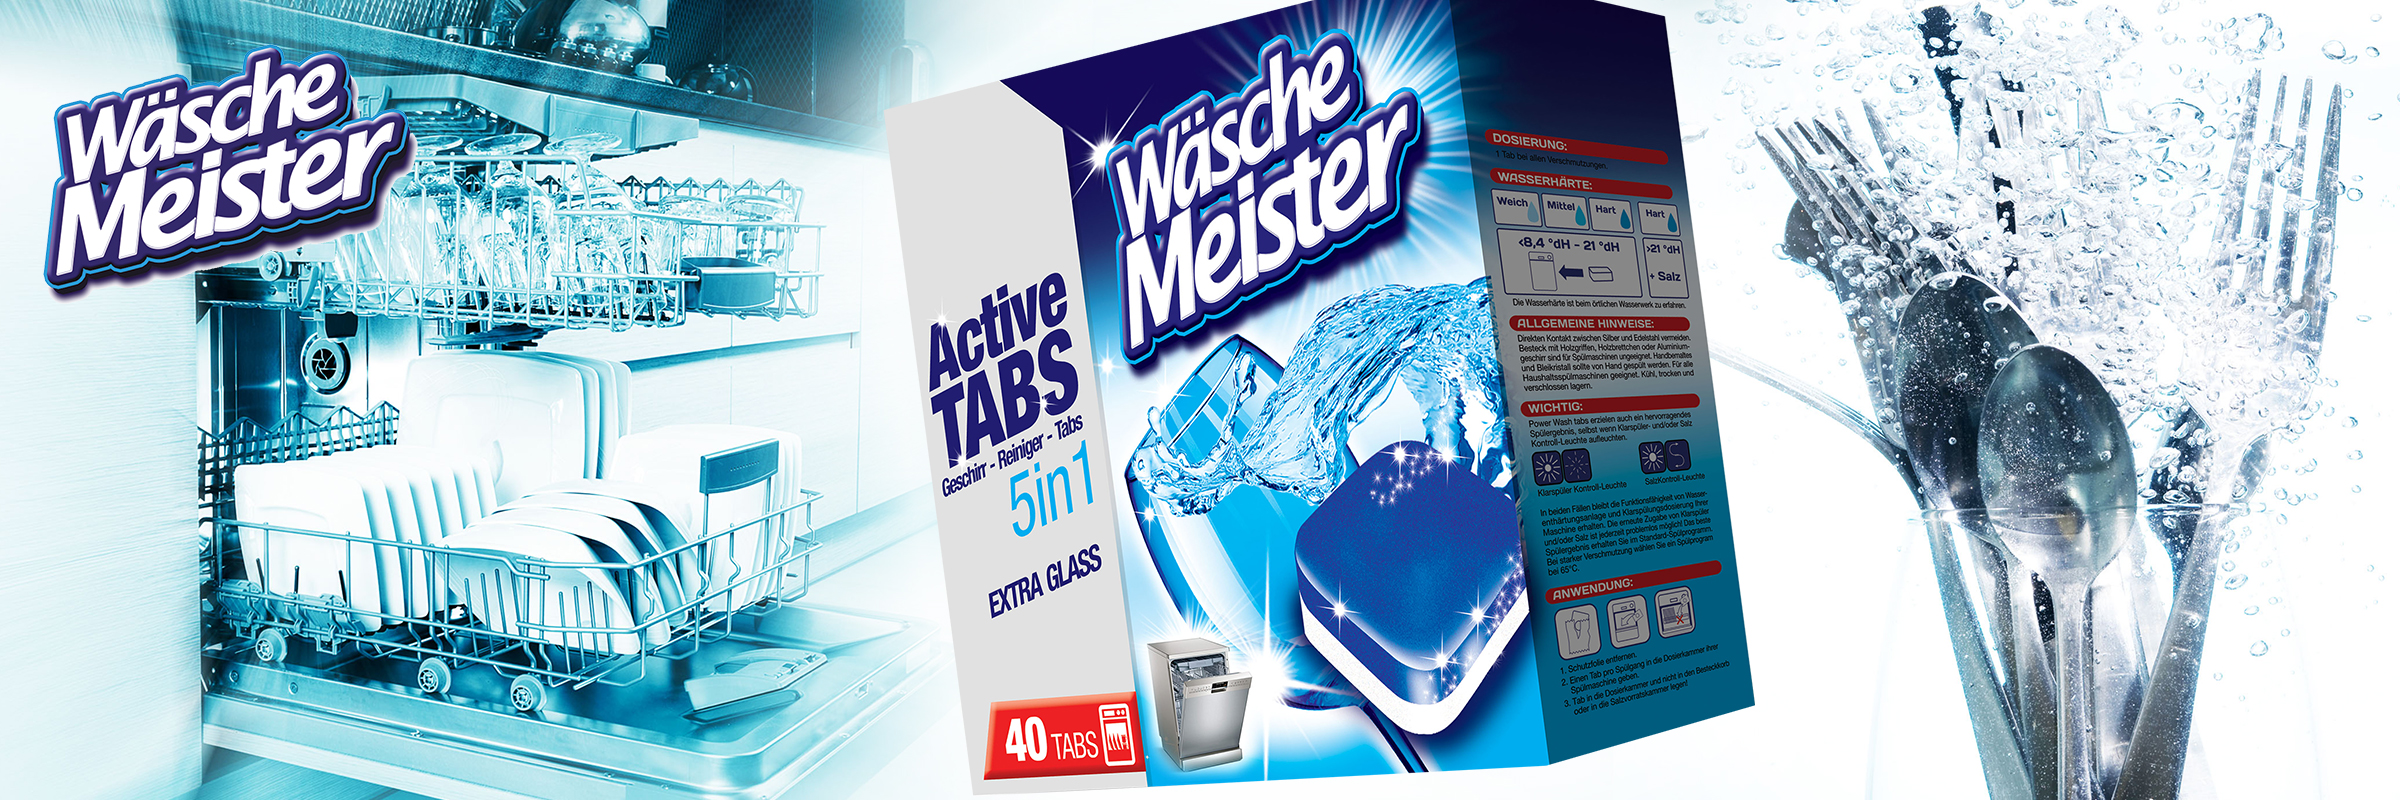 WäscheMeister tablets for a dishwasher